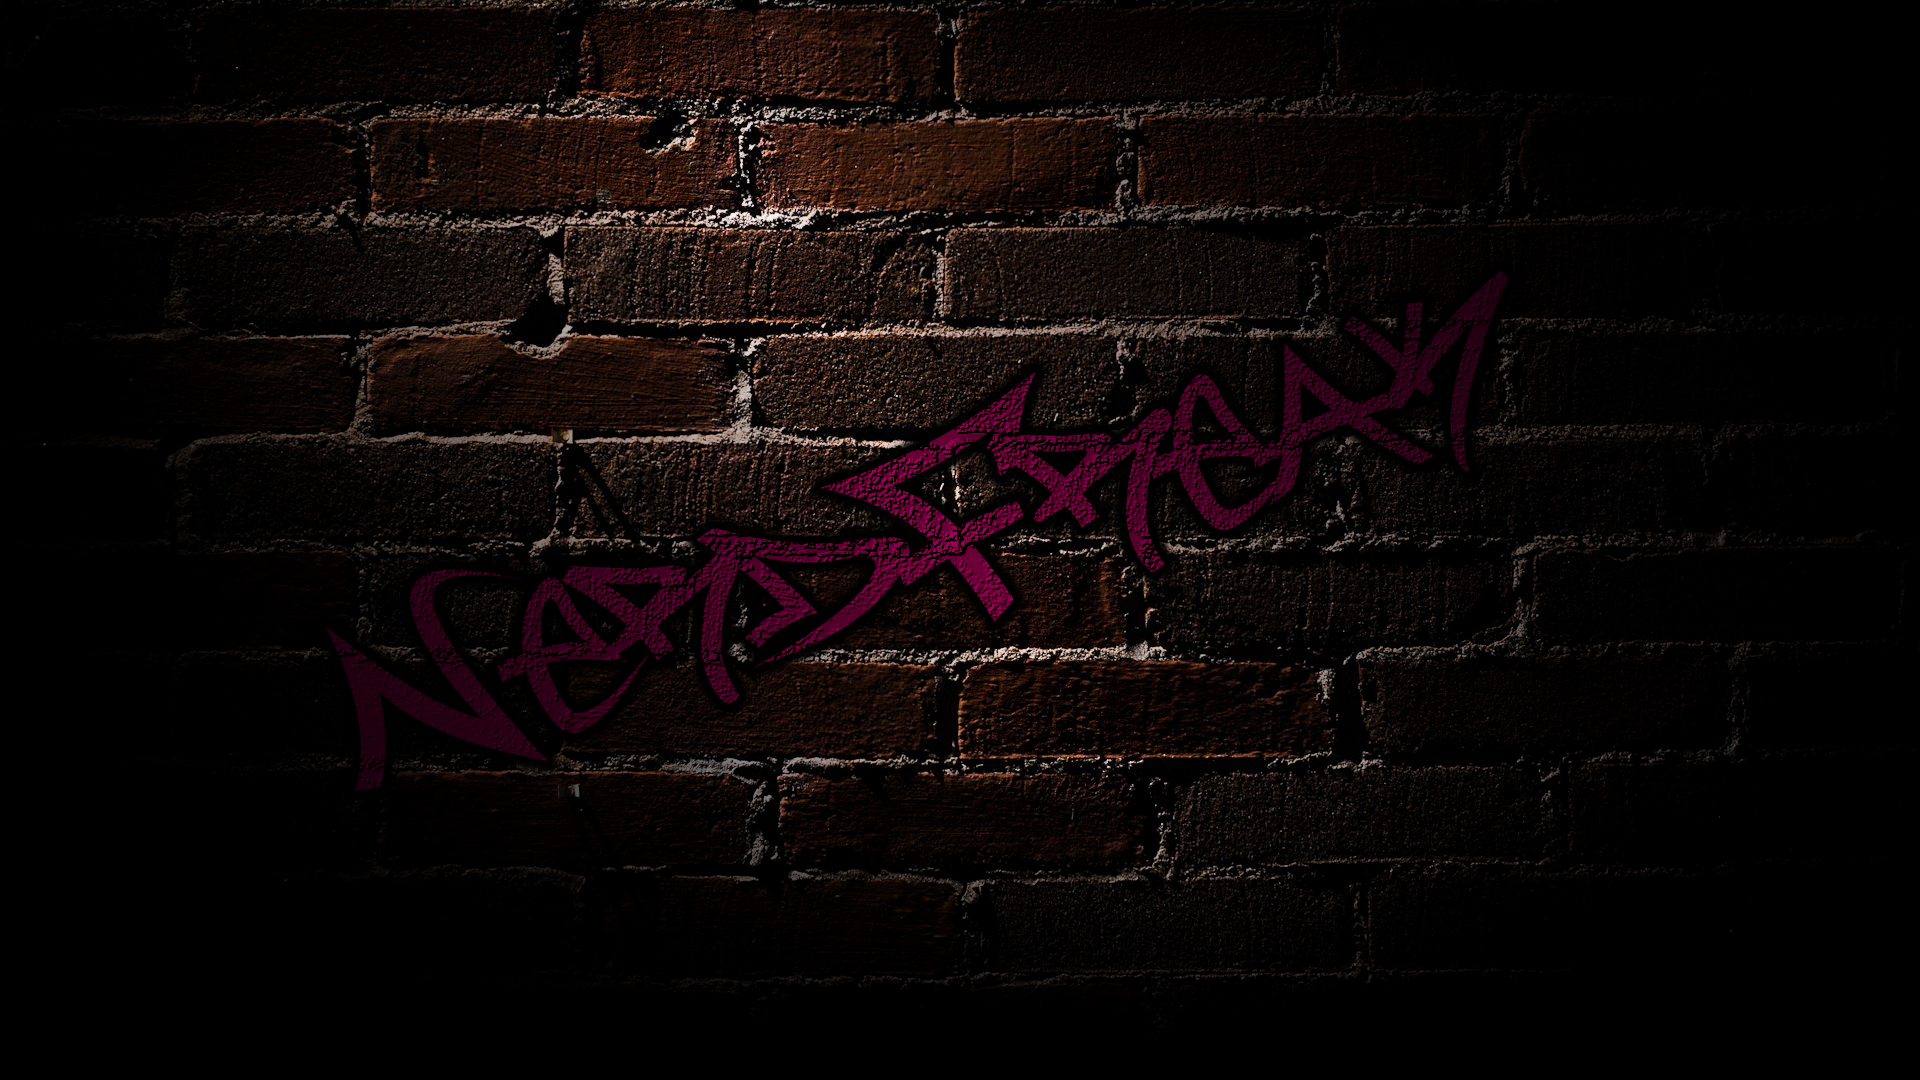 Nerdfreak Brick Wall Graffiti Shadows Wallpaper And